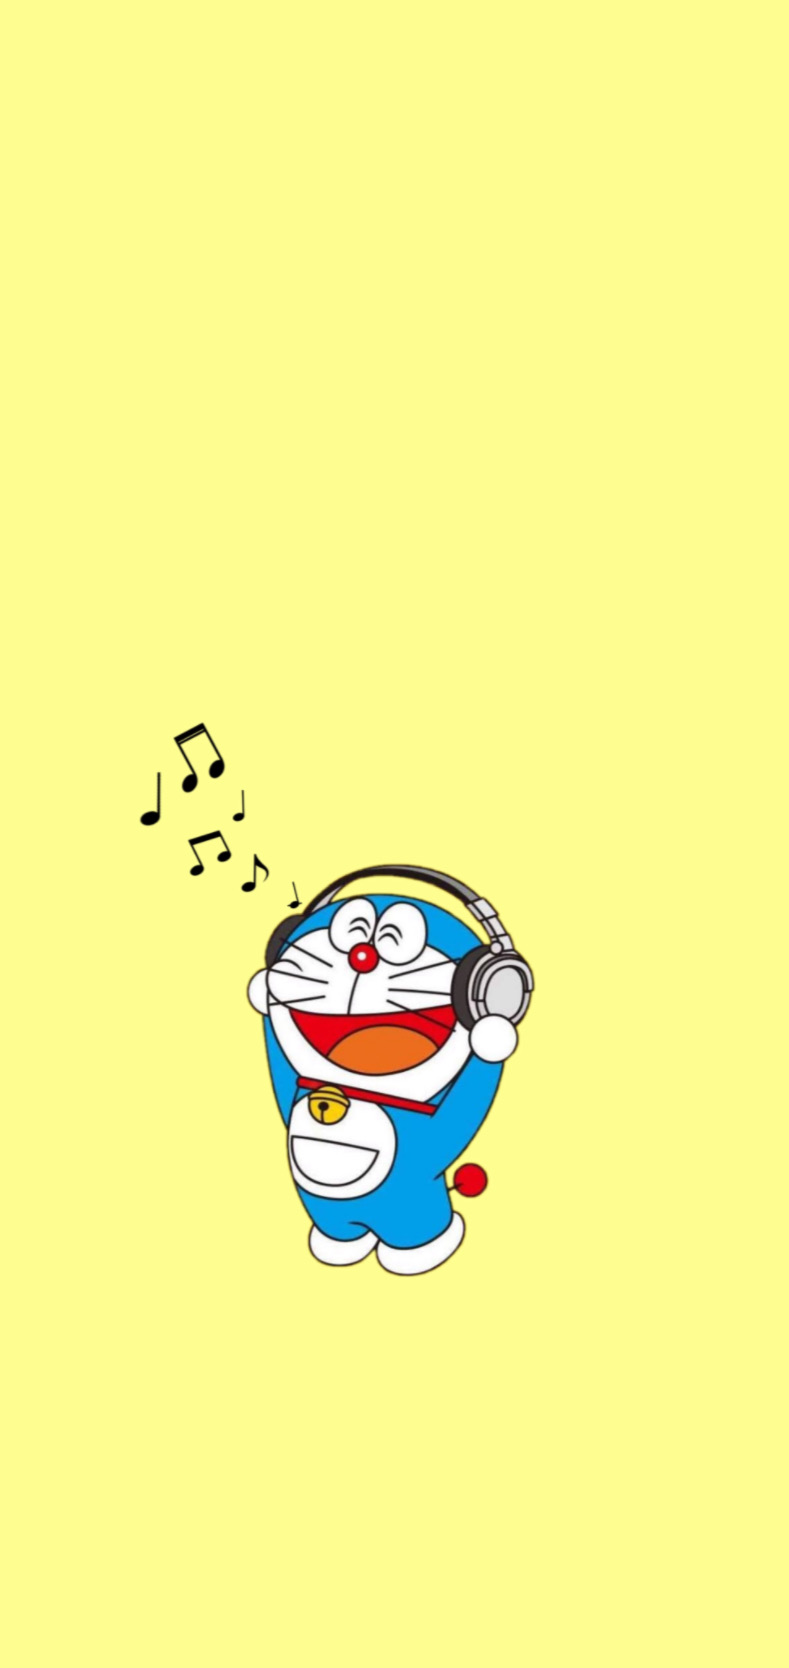 Hình nền Doraemon cute cho điện thoại8